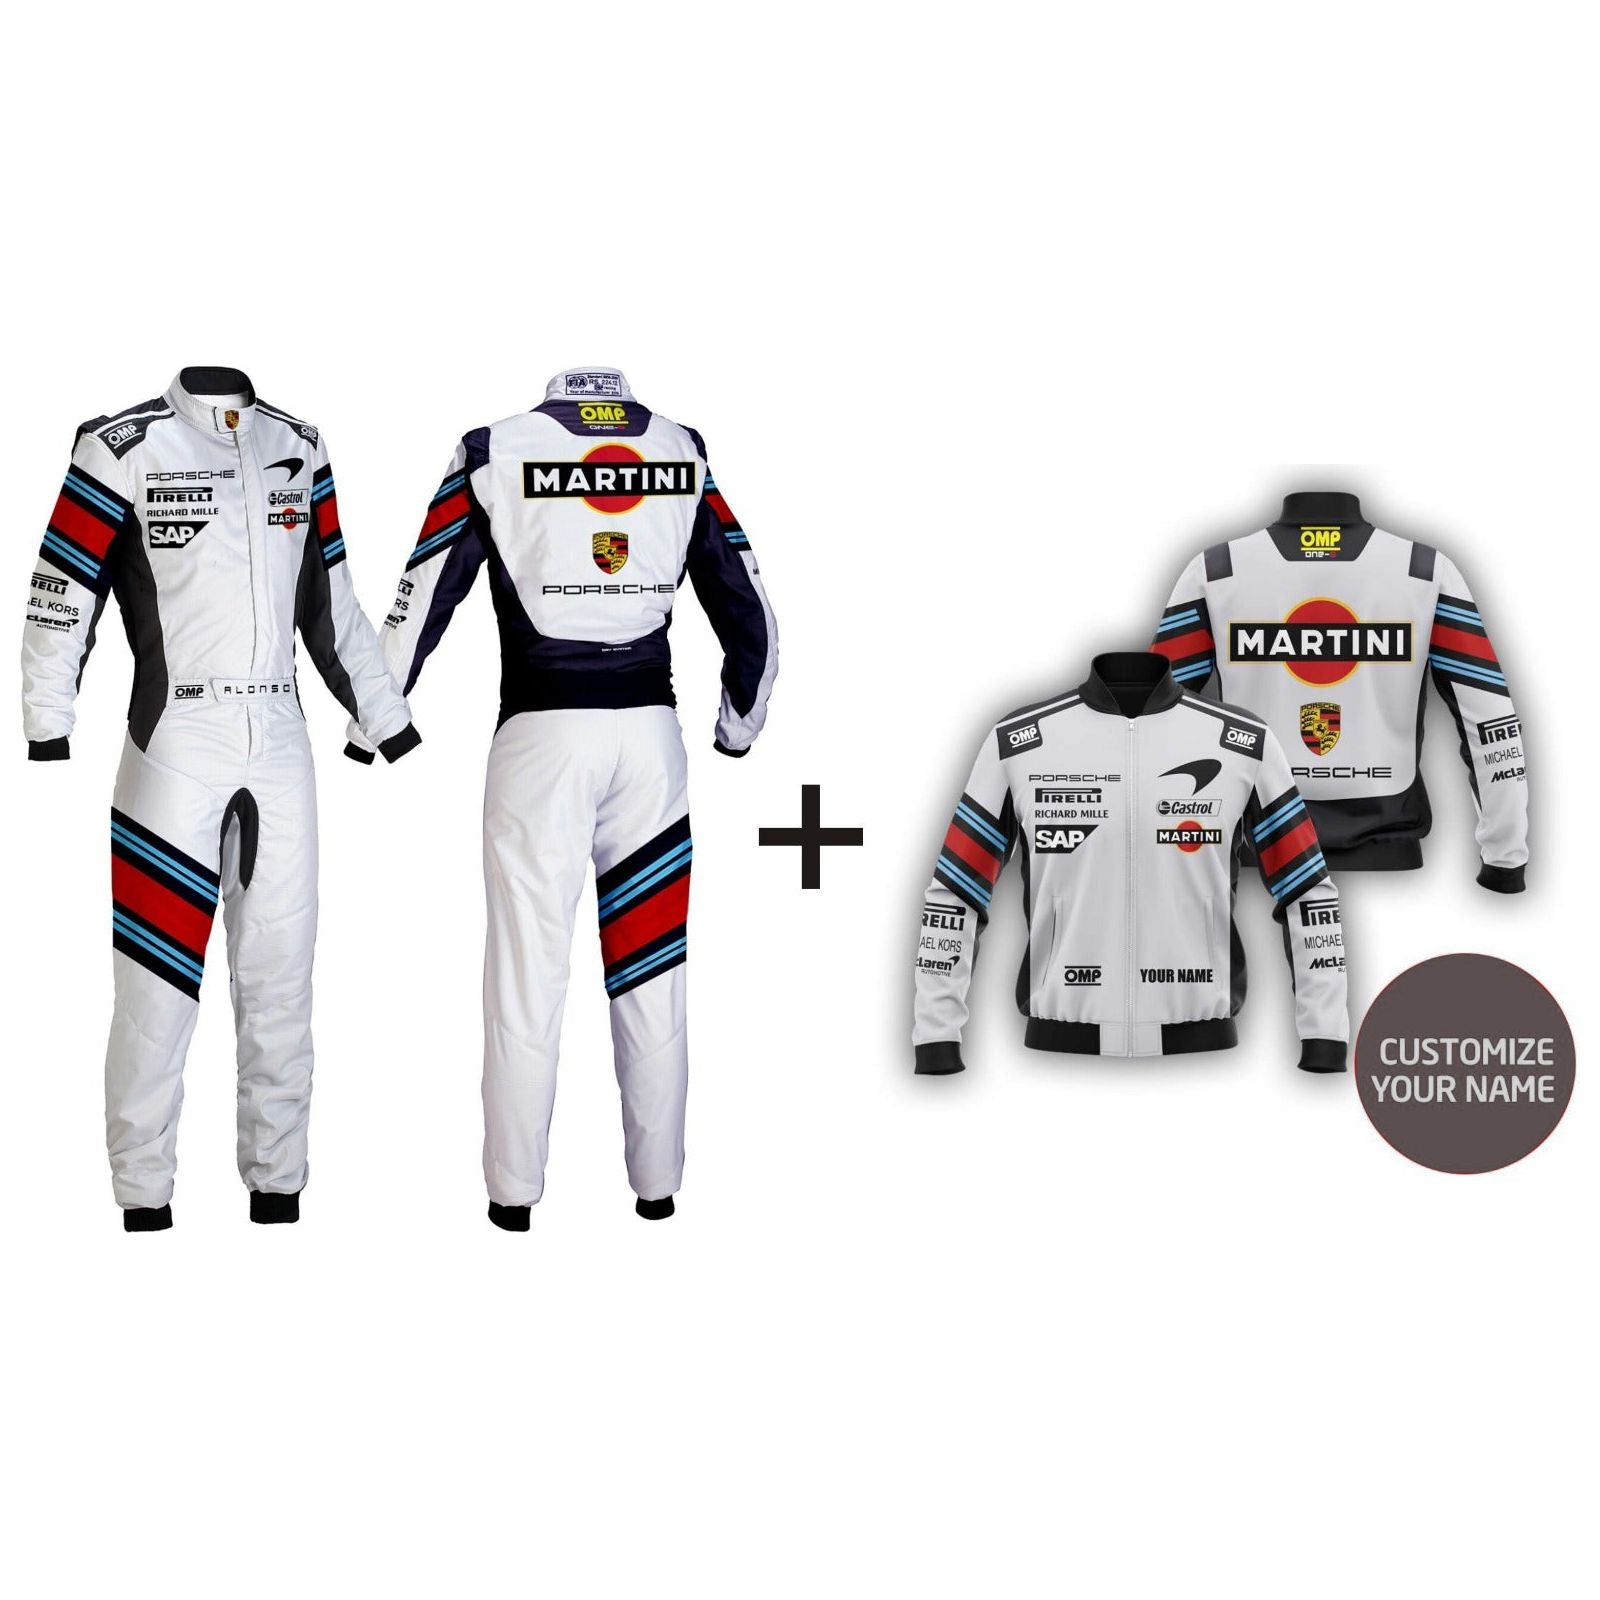 Kartex Racer Store sublimated Go Kart Suit soft Jacket [All Sizes]